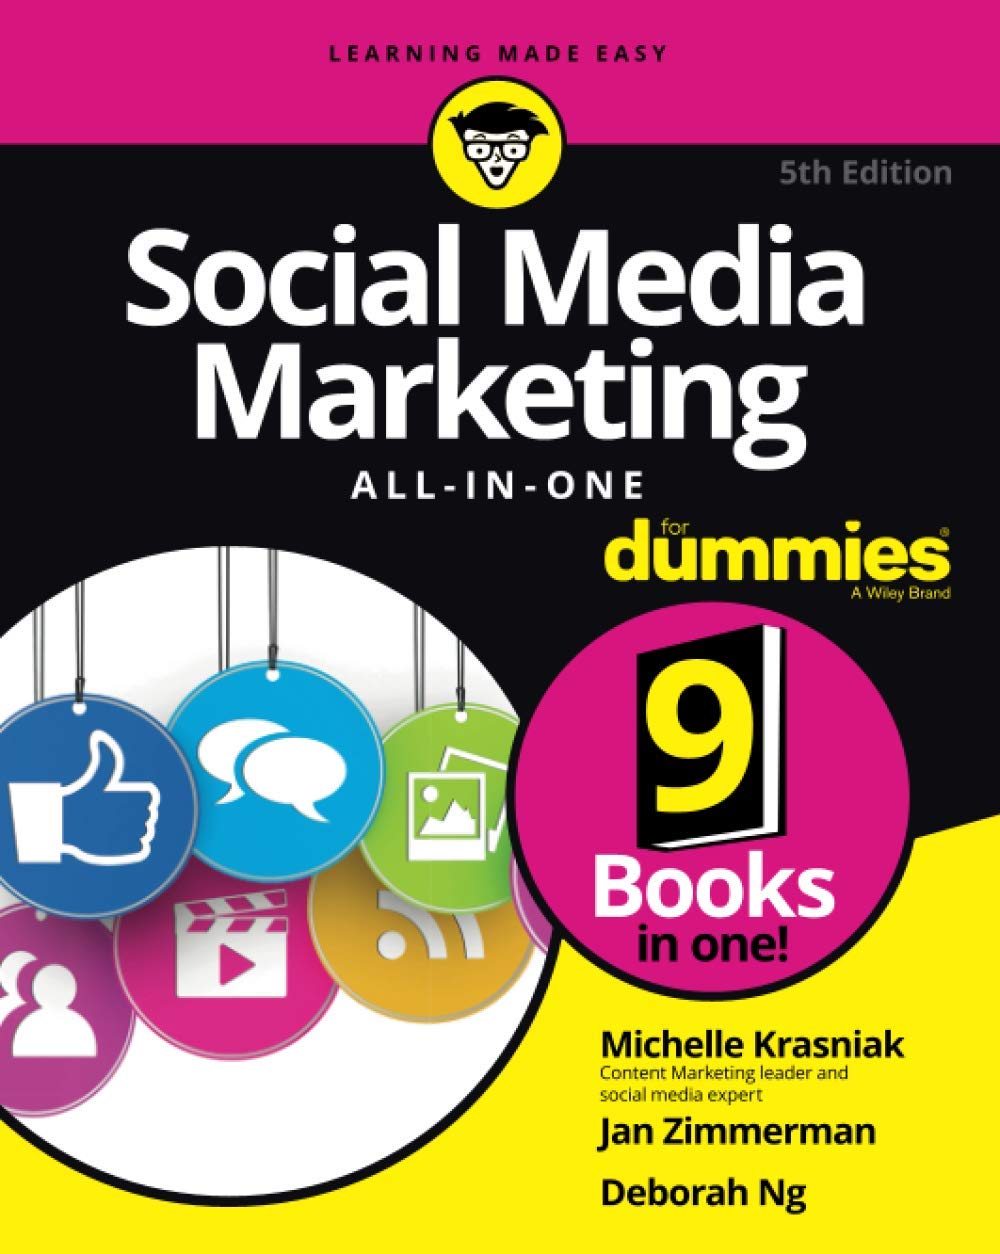 Social Media Marketing All-in-One For Dummies | Jan Zimmerman, Deborah Ng, Michelle Krasniak